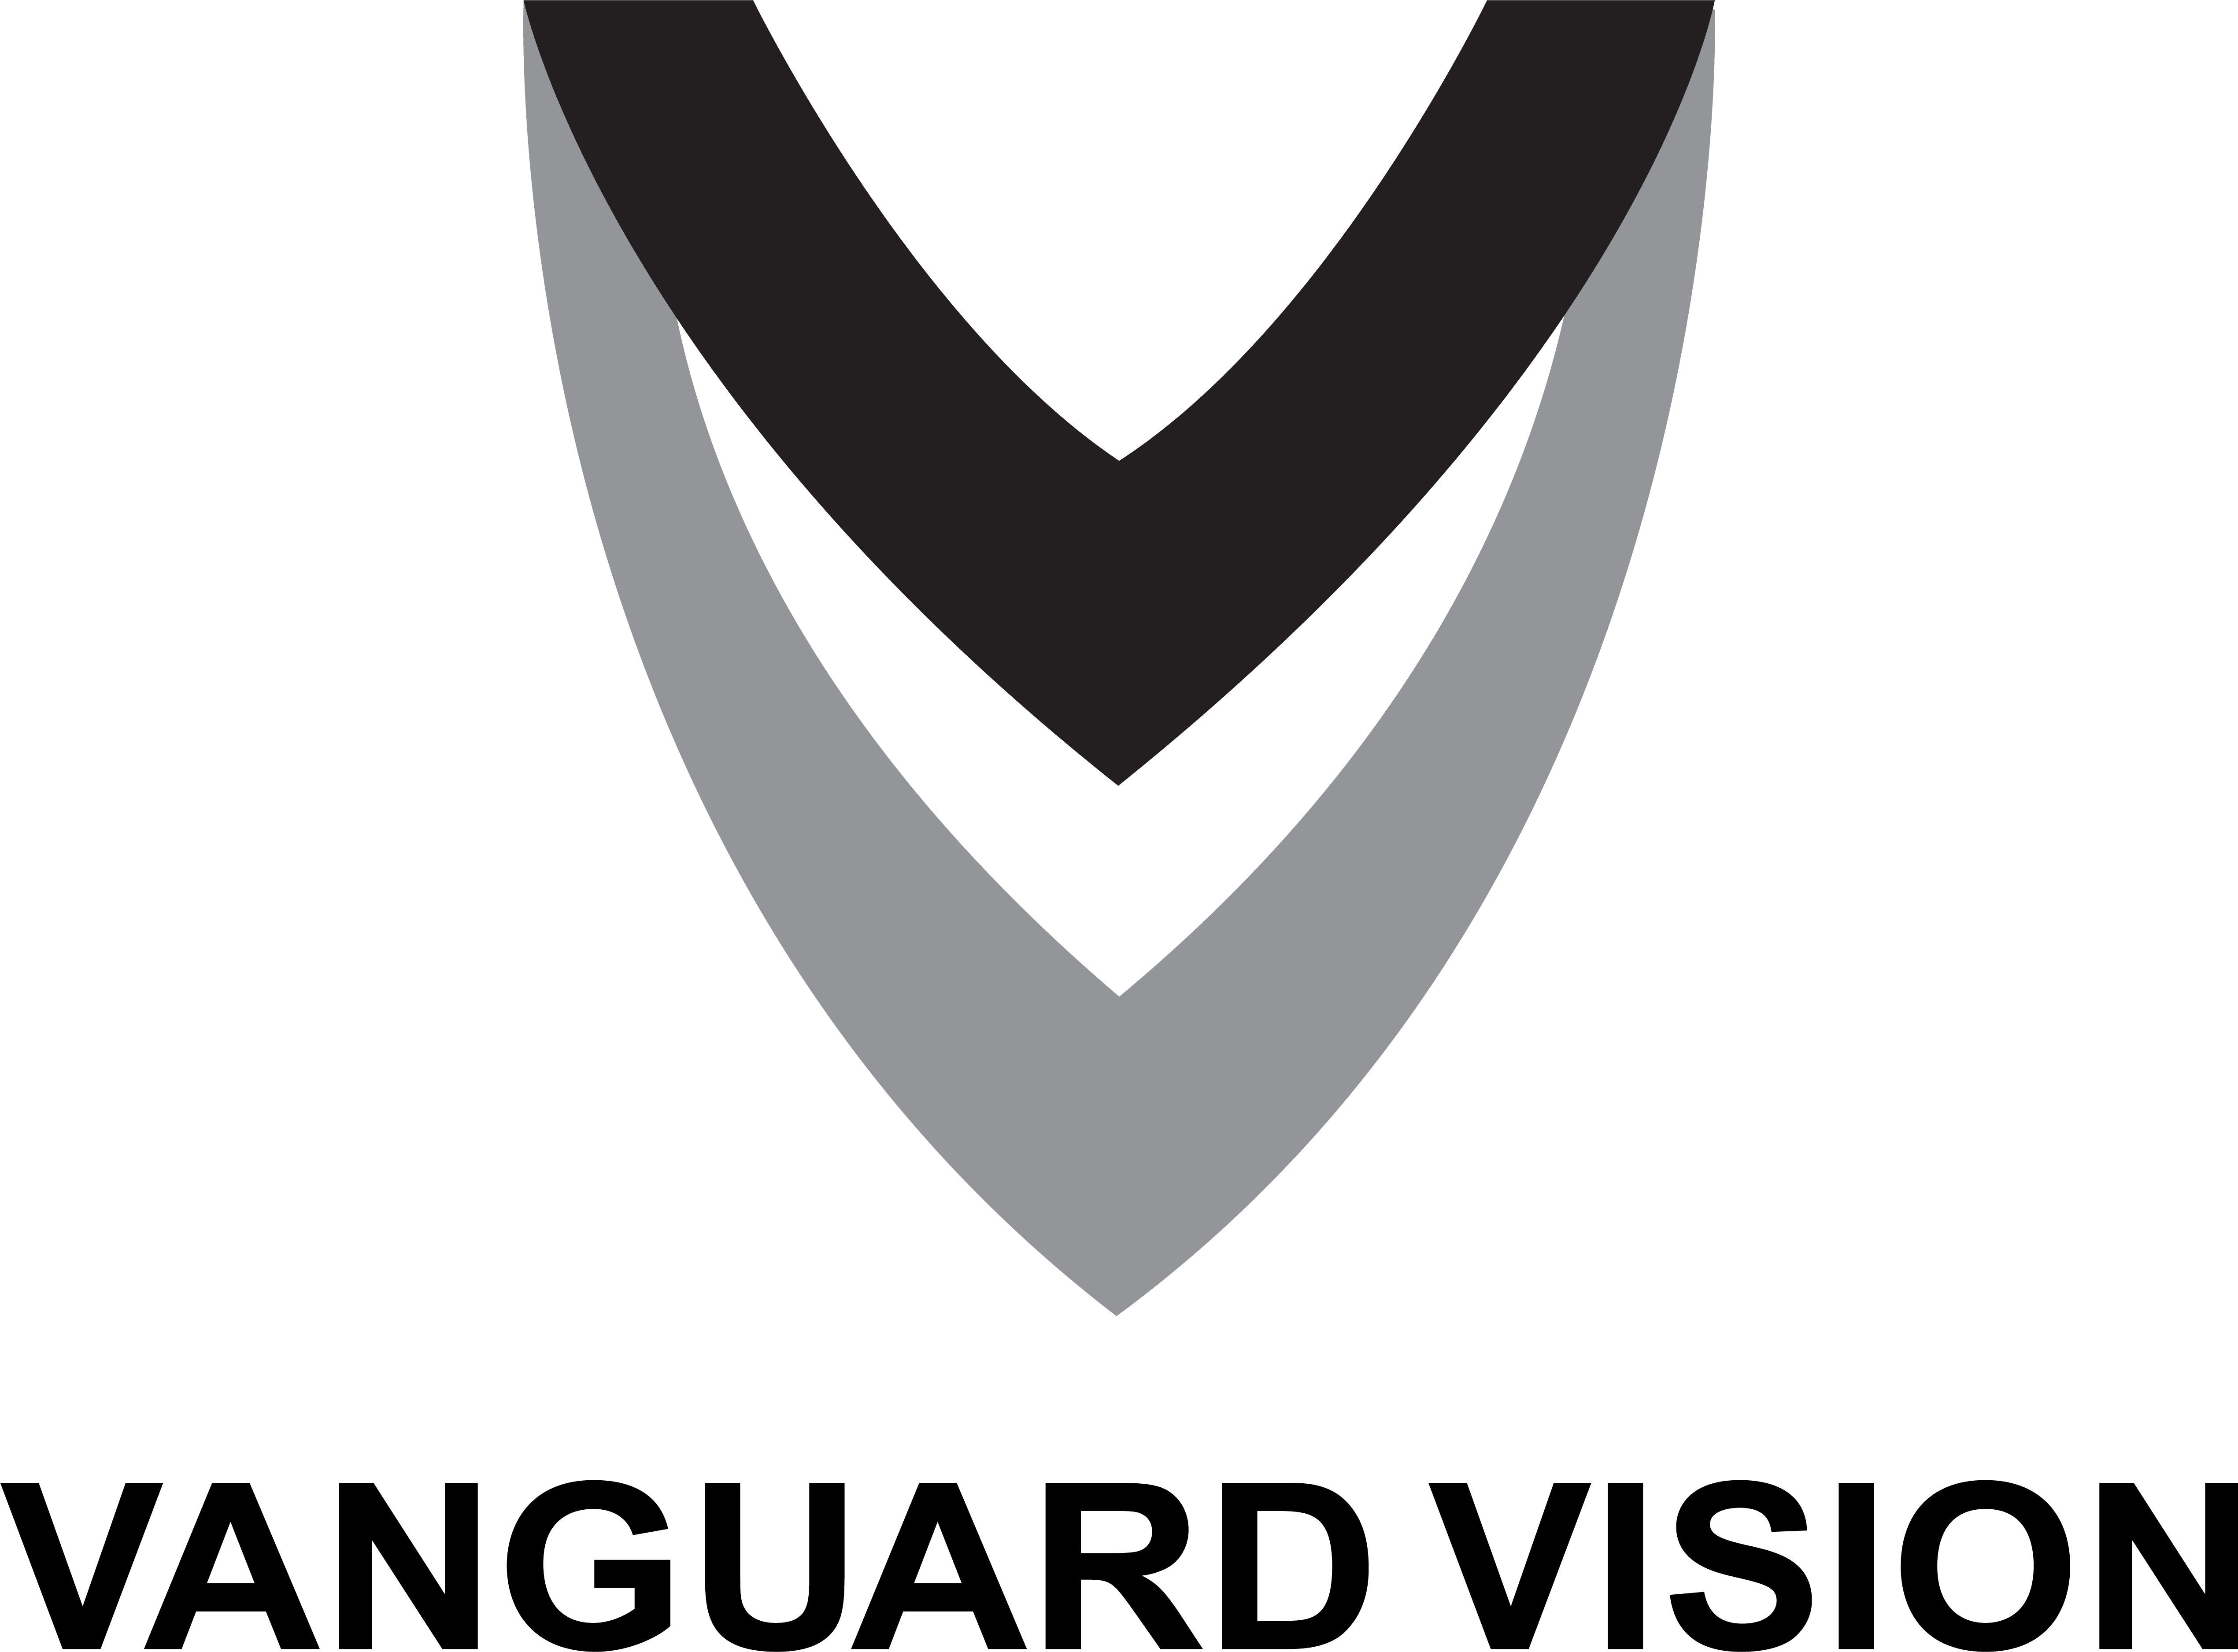 VANGUARD VISION
FANUC INTEGRATED SOLUTIONS